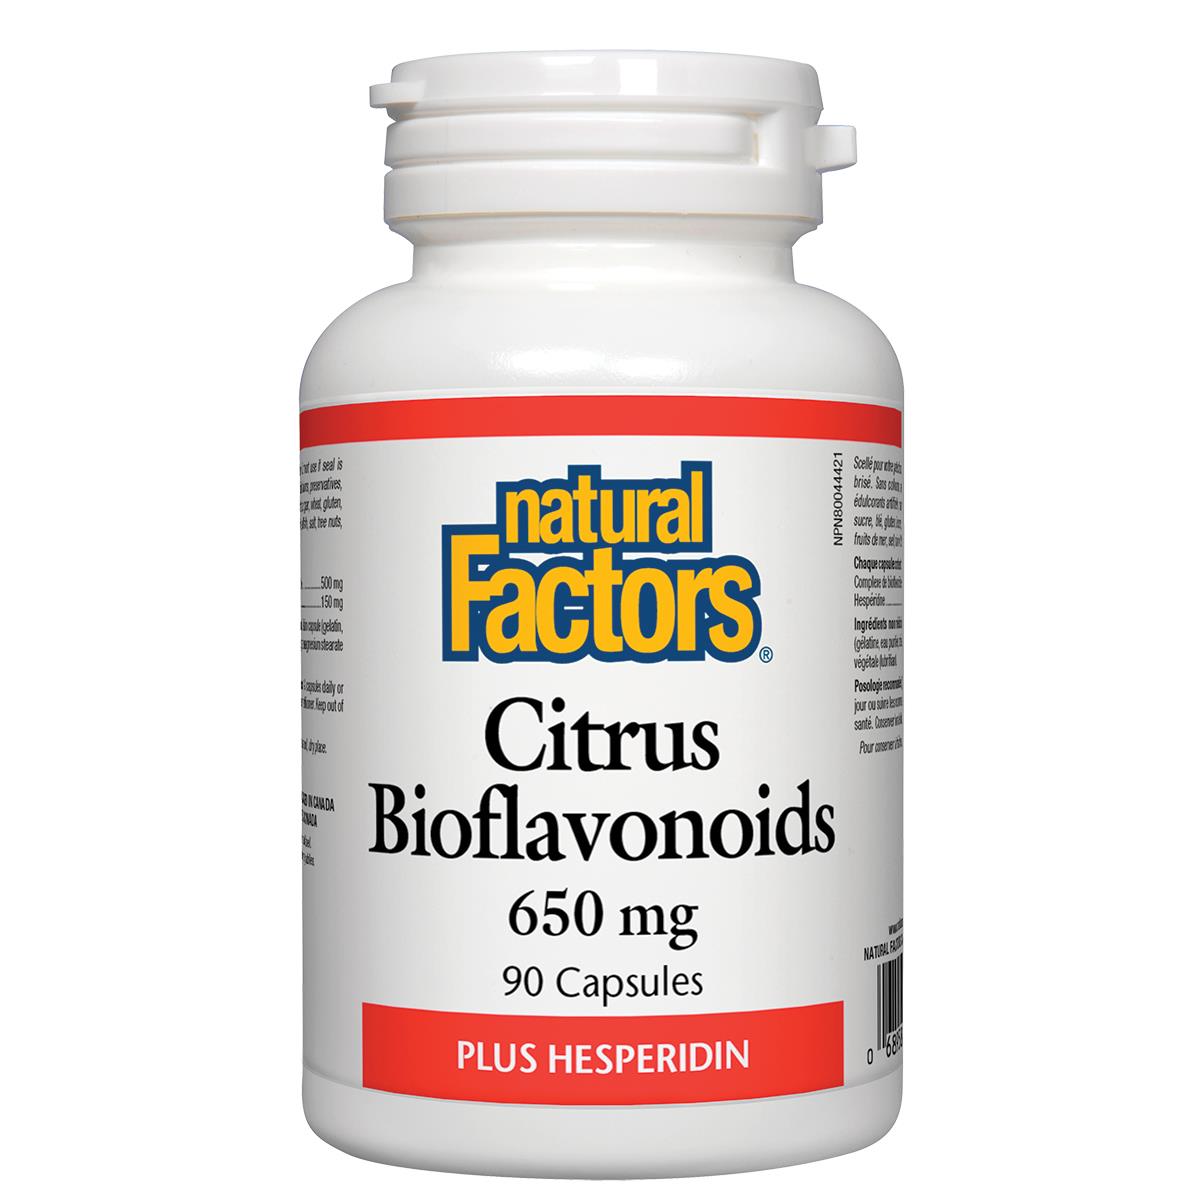 Natural Factors Citrus Bioflavonoids plus Hesperidin, 650mg - 90 Caps - Homegrown Foods, Stony Plain